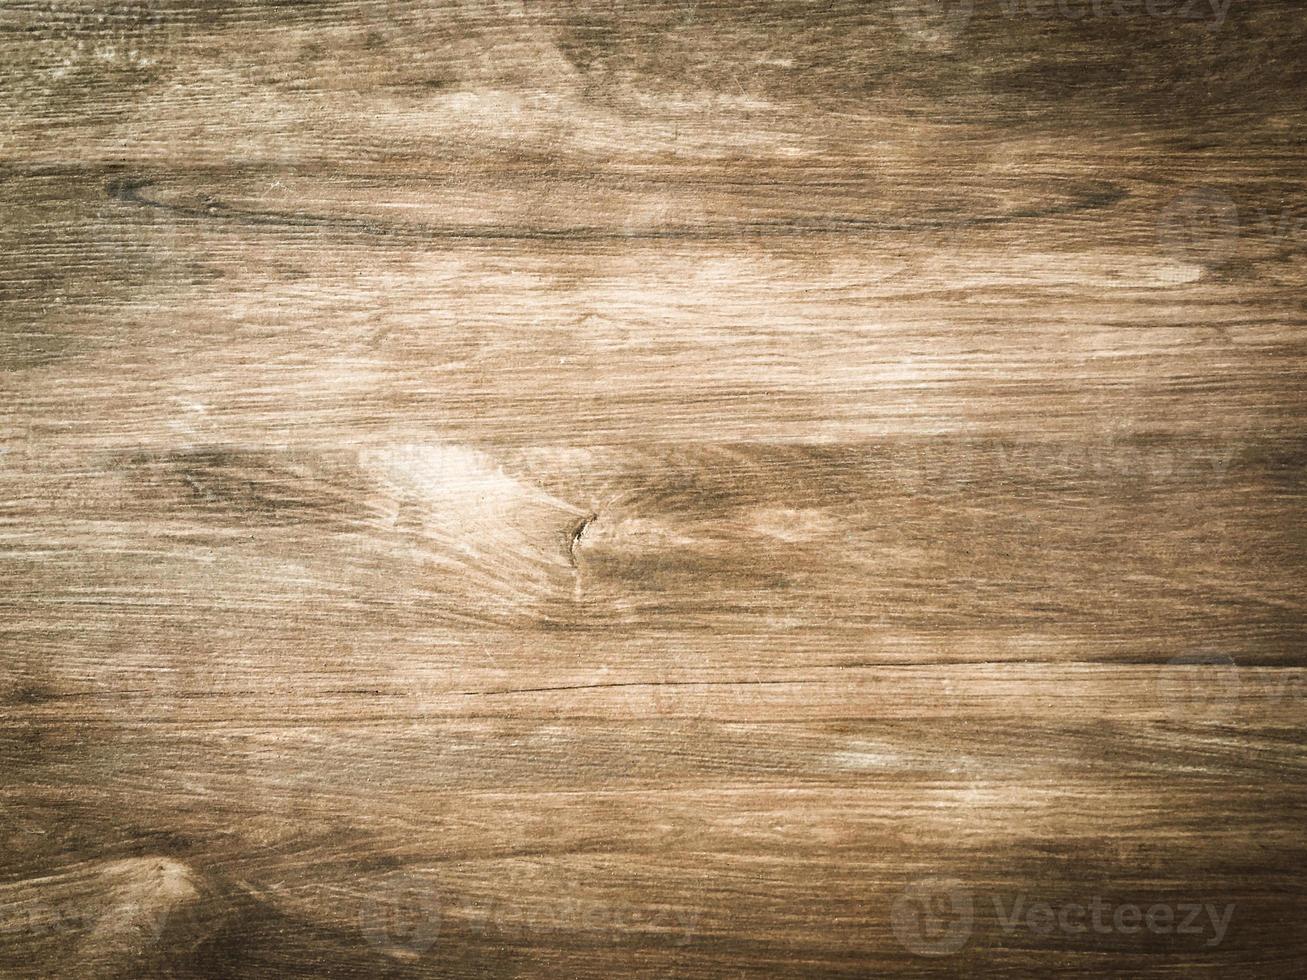 uso de textura de madera abstracta como fondo natural para el diseño de obras de arte. foto